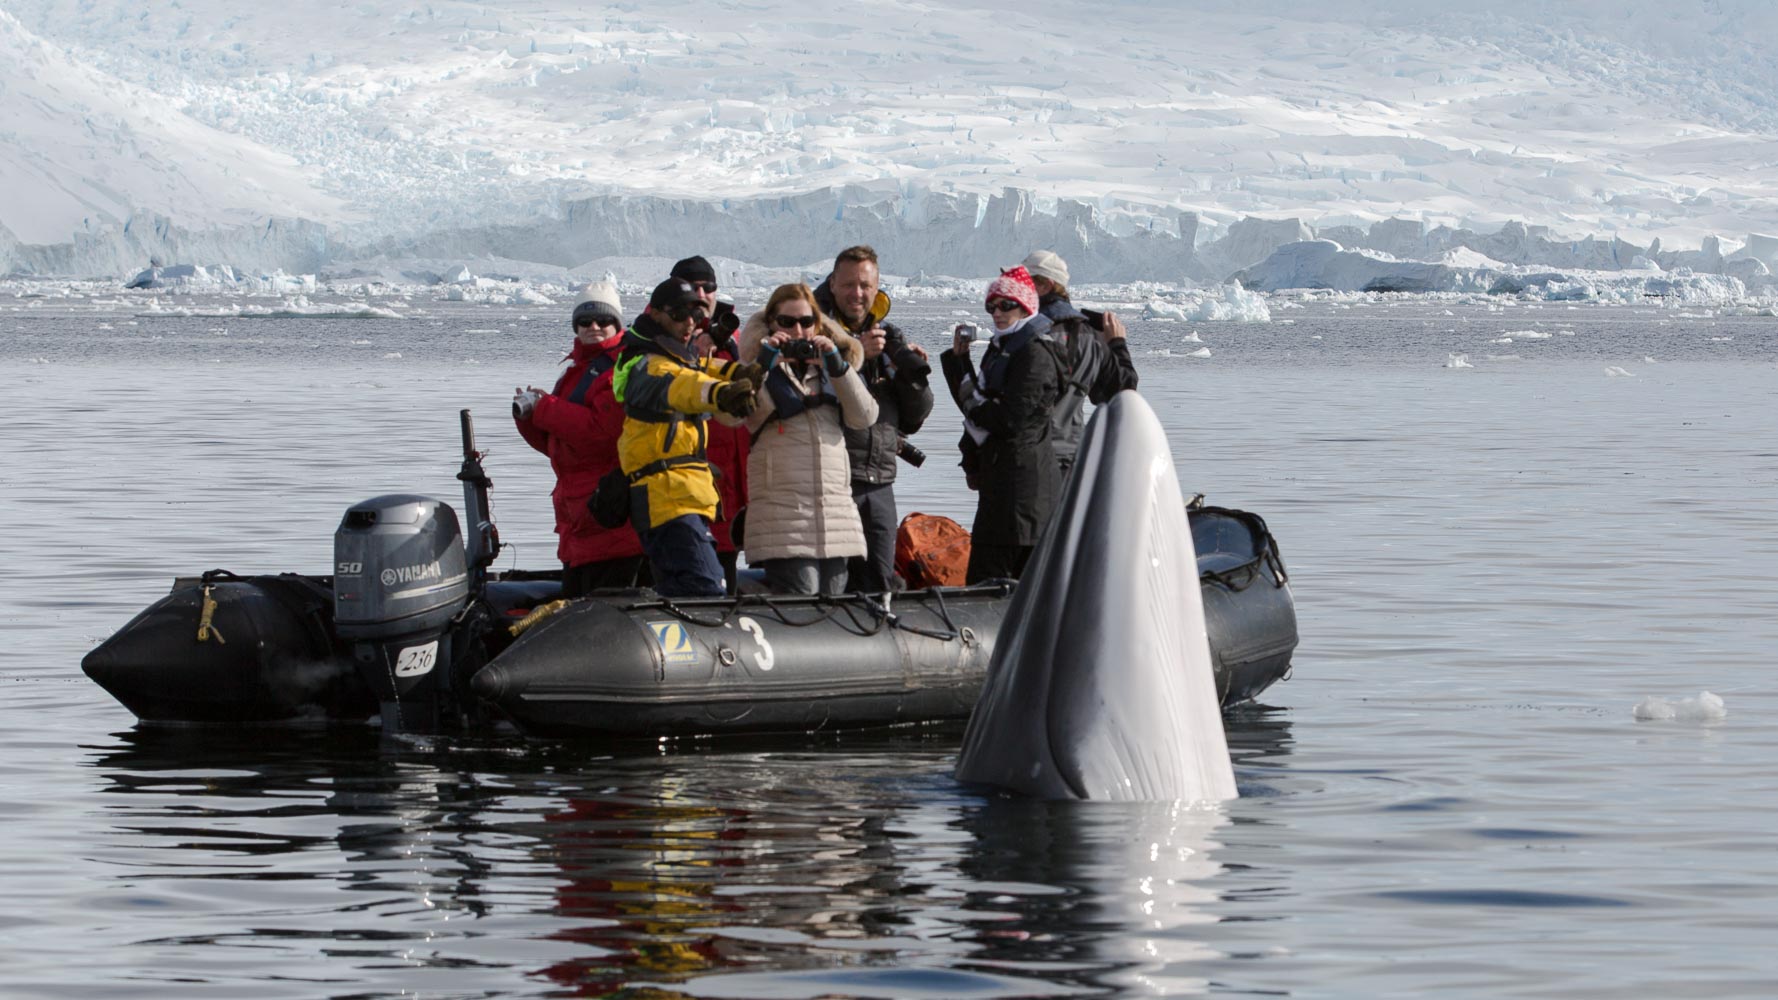 Jonathan Zaccaria and you watching antarctic Minke whale